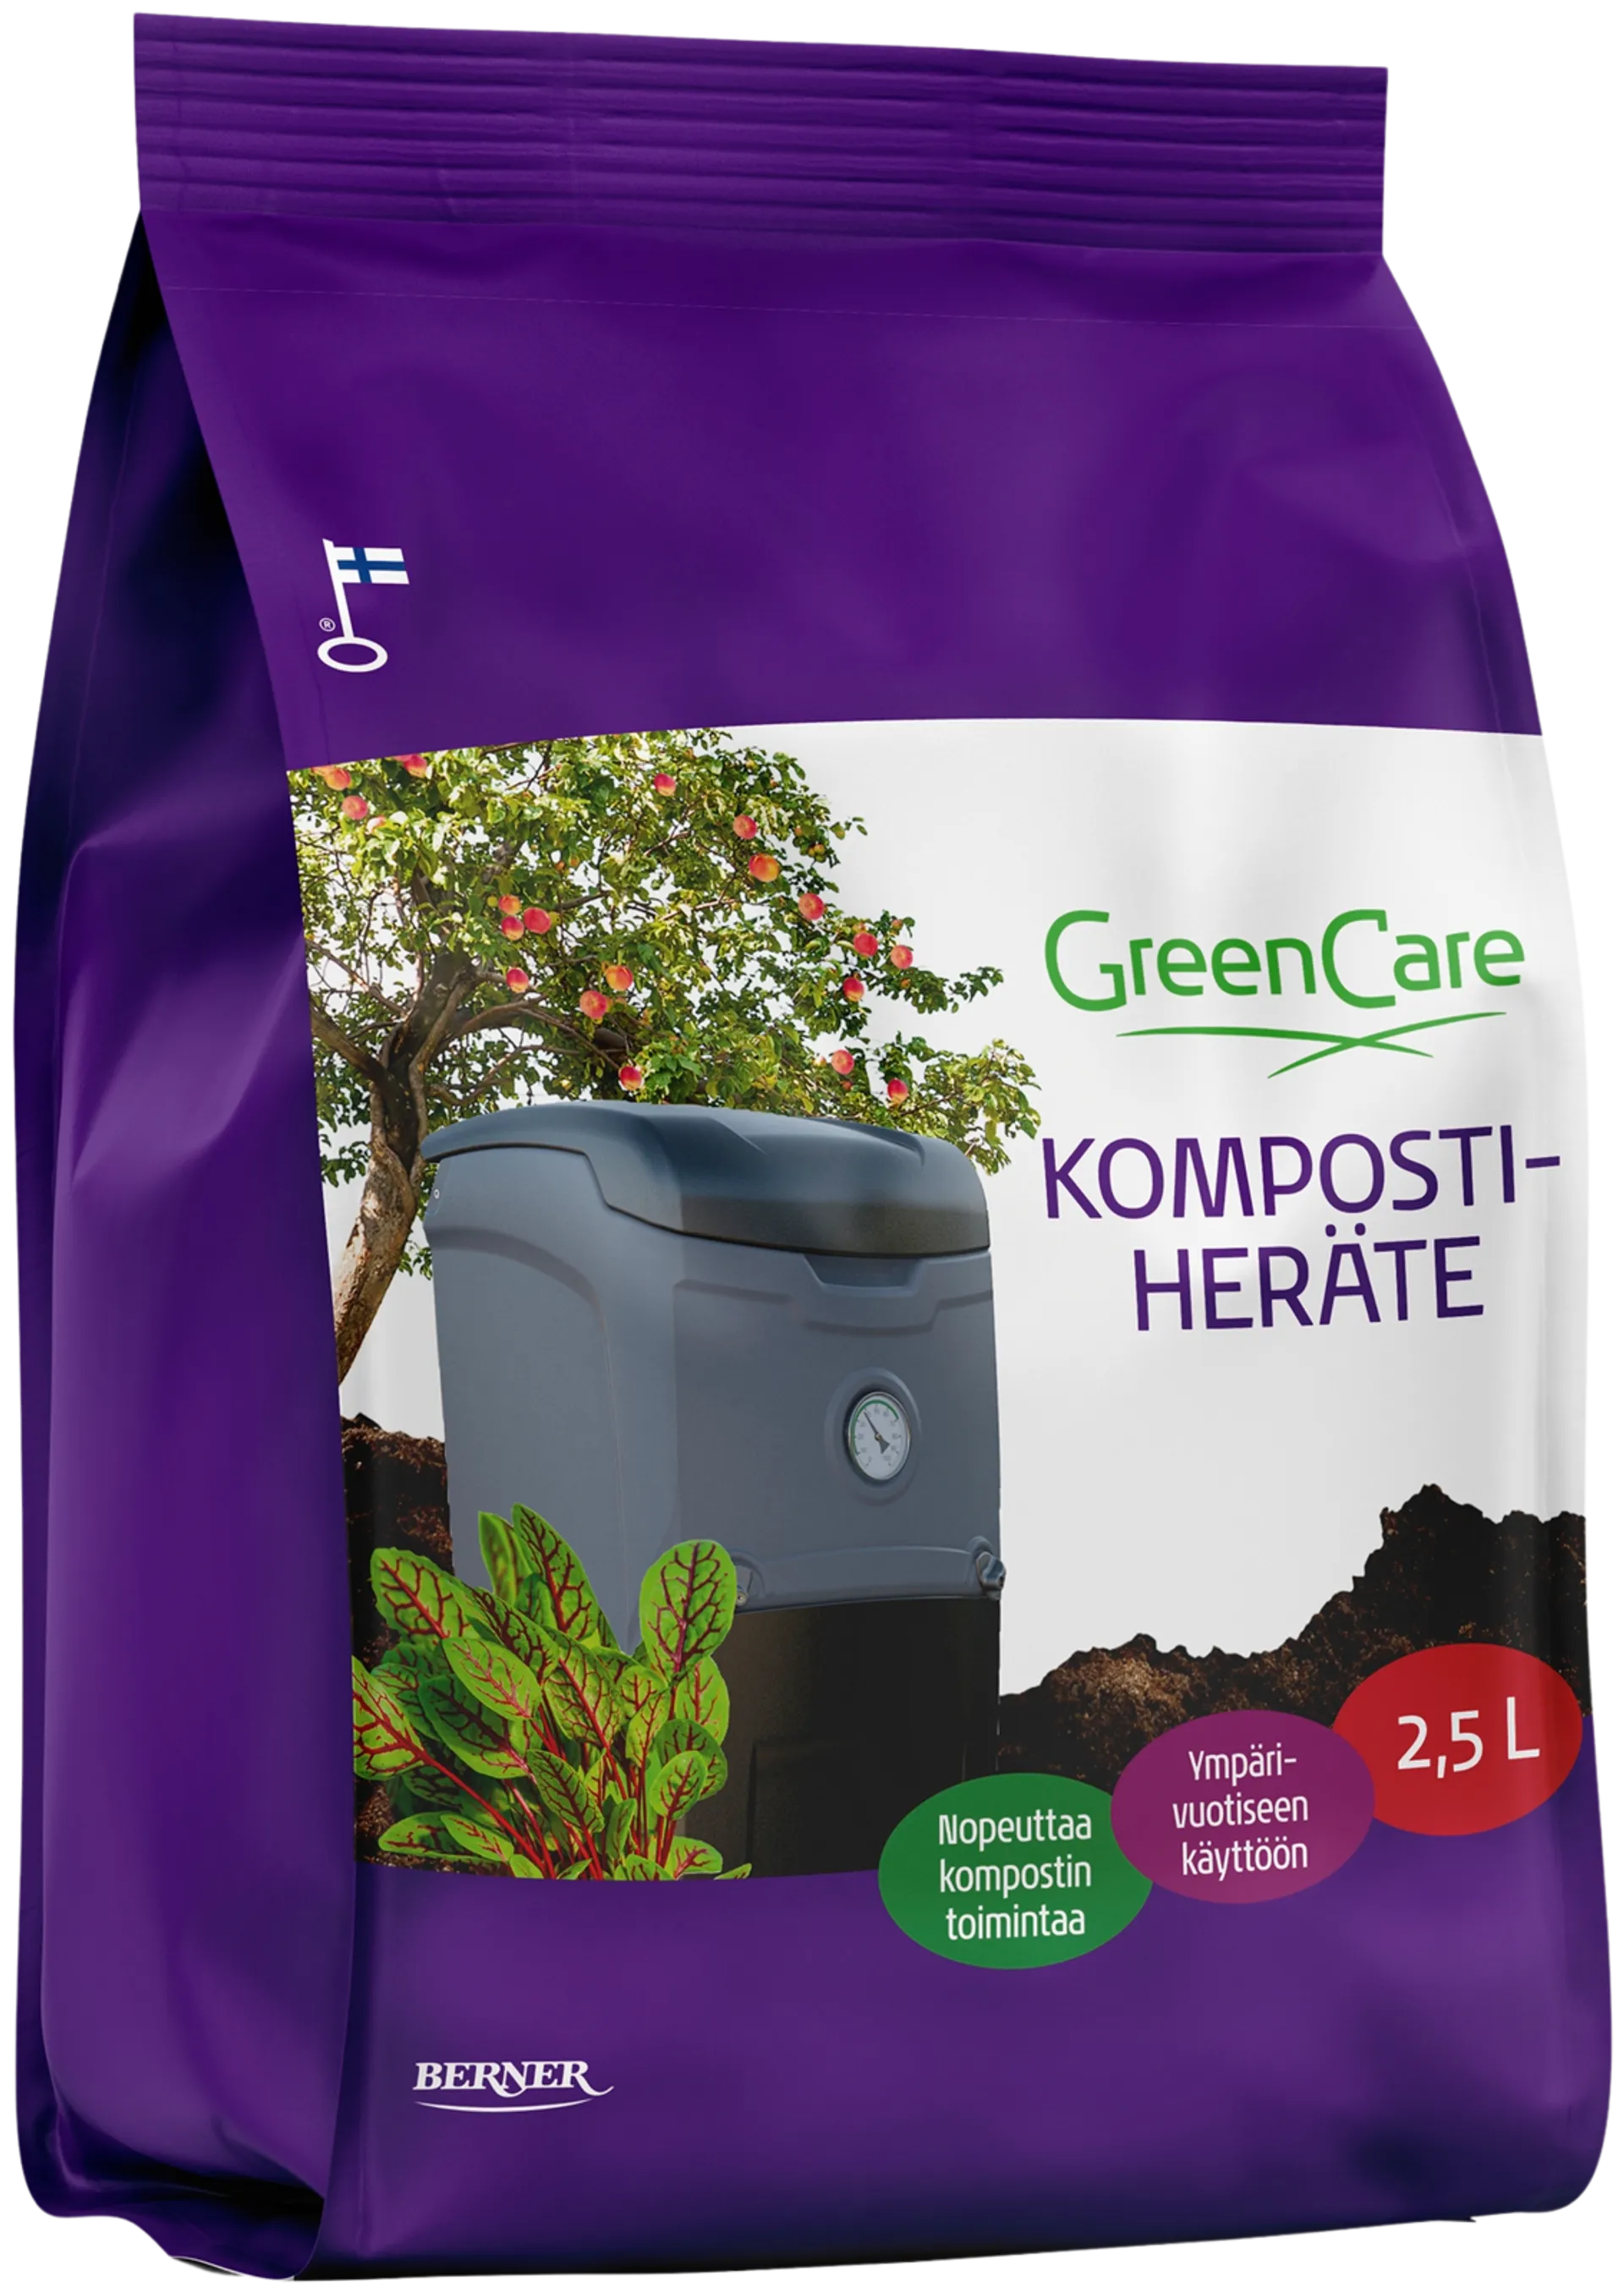 GreenCare Kompostiheräte 2,5 l